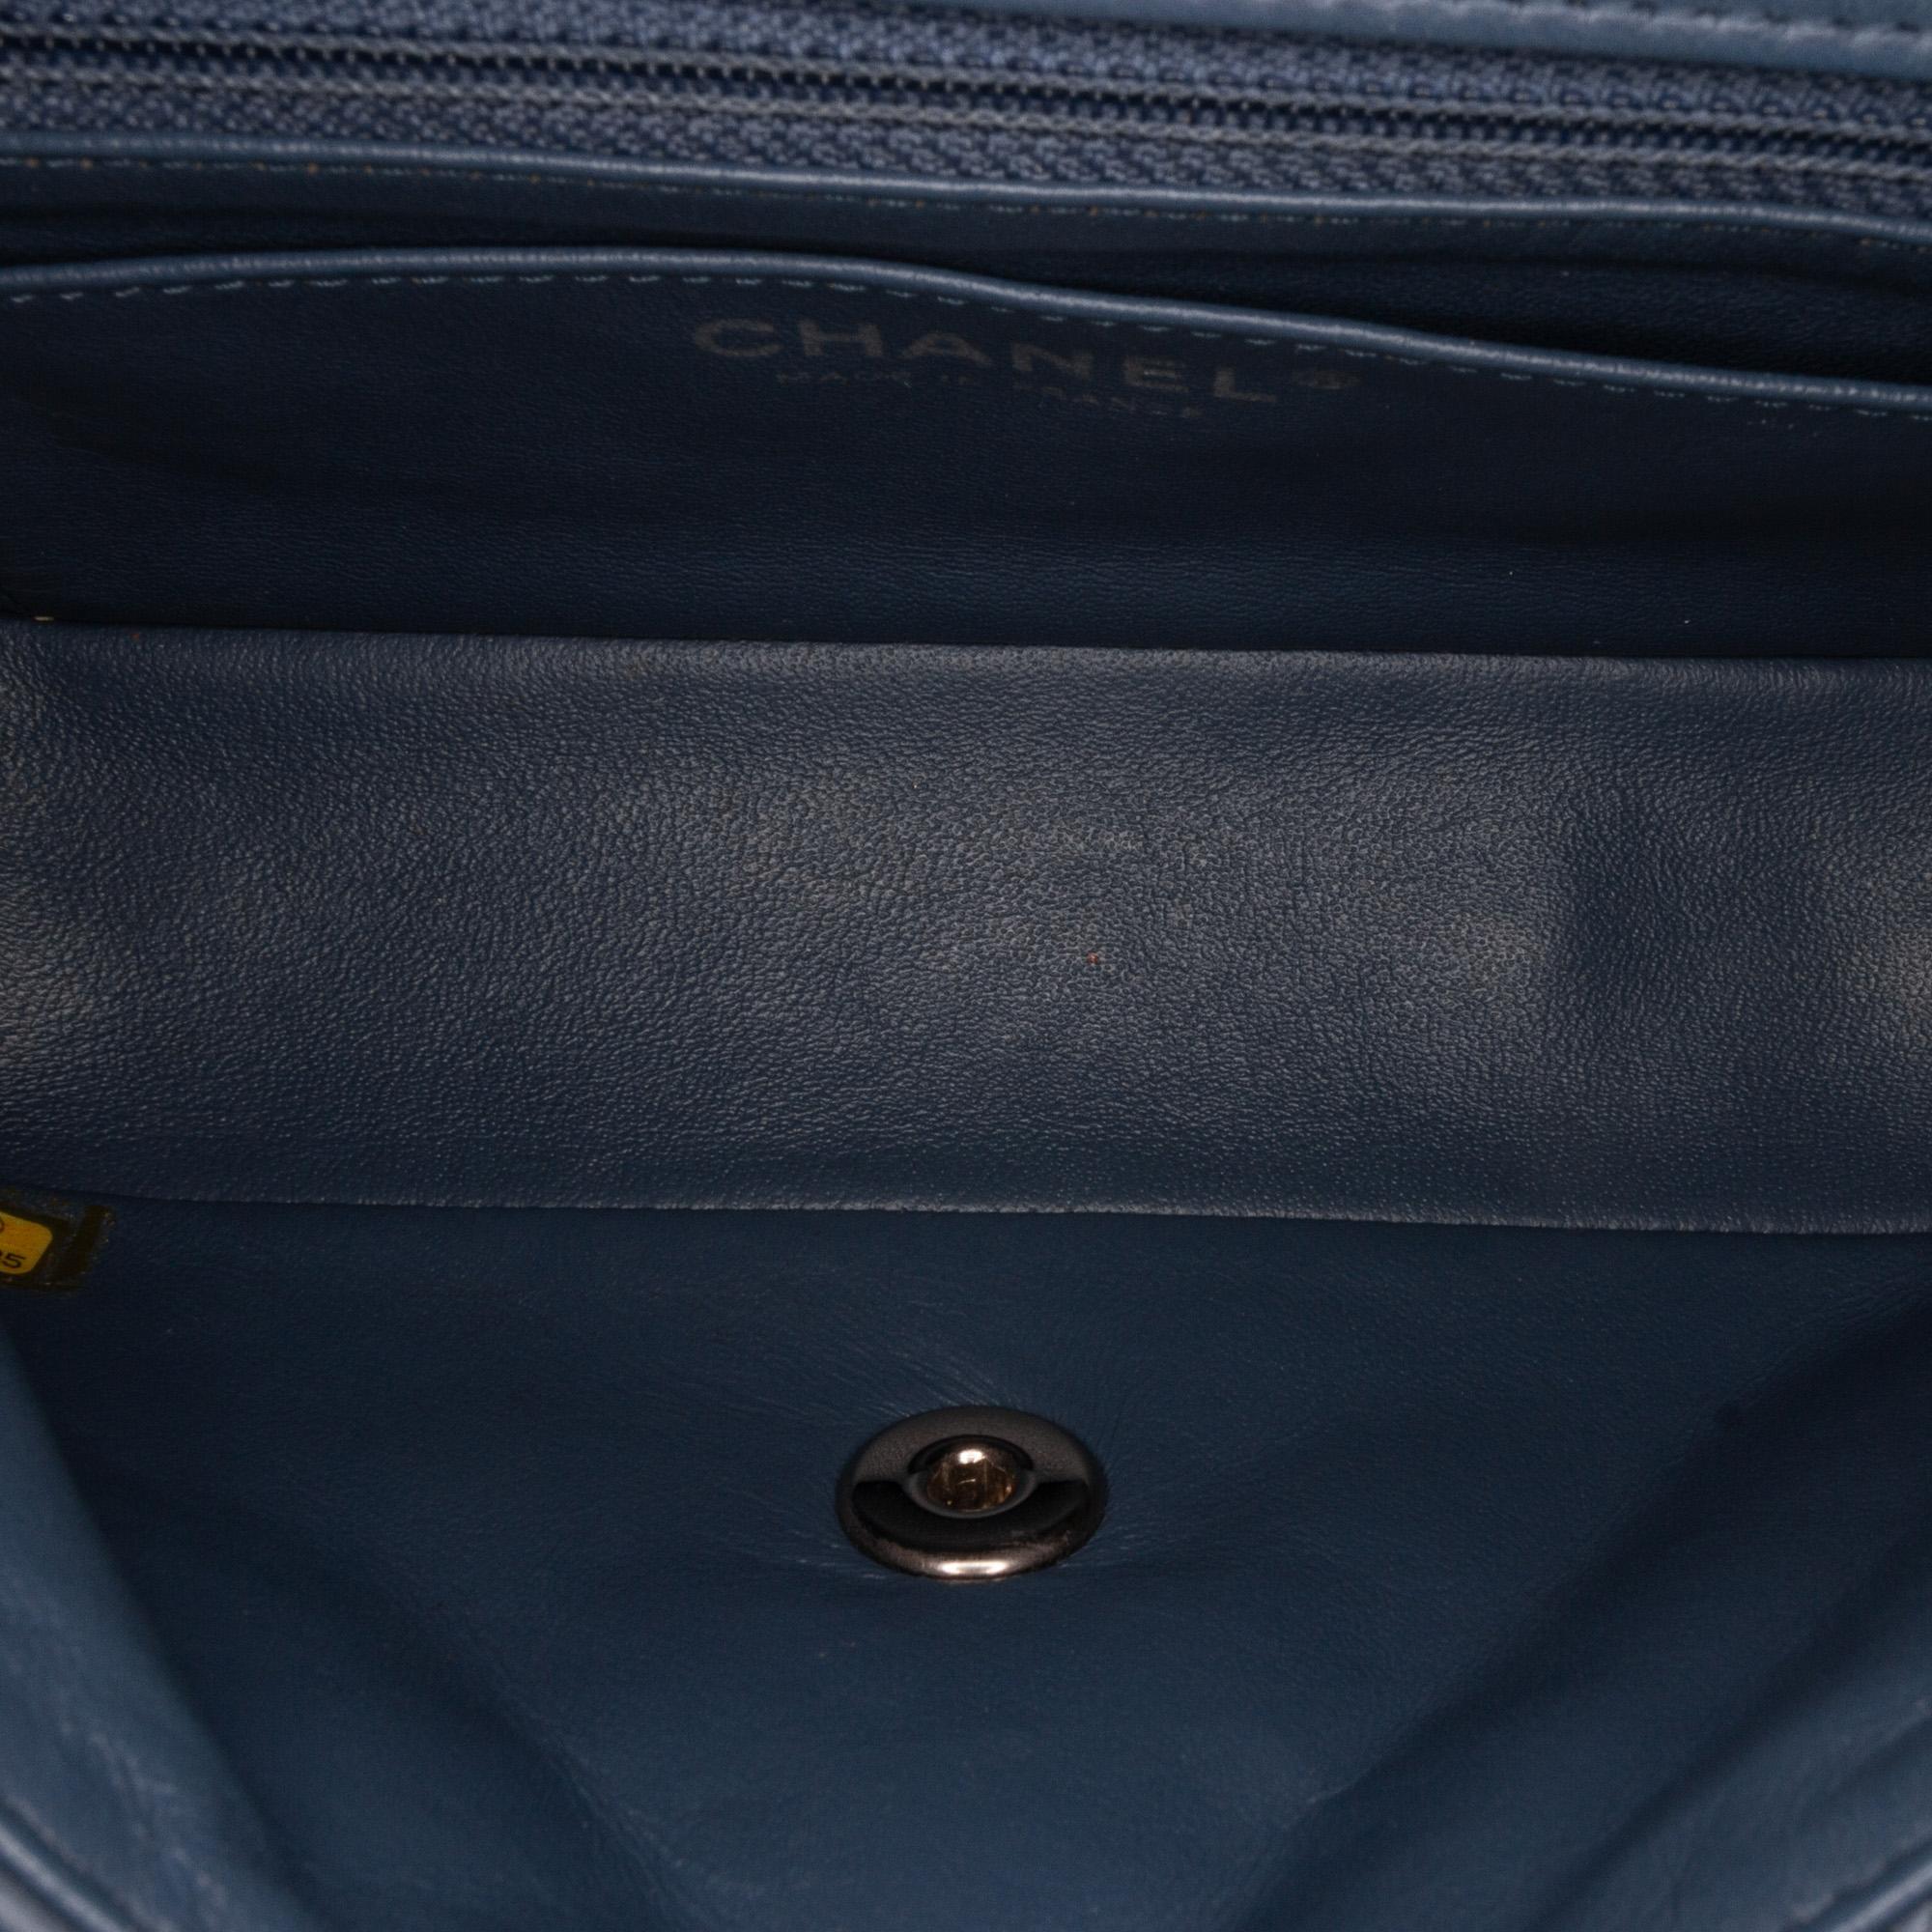 Chanel Blue Mini Classic Lambskin Rectangular Single Flap